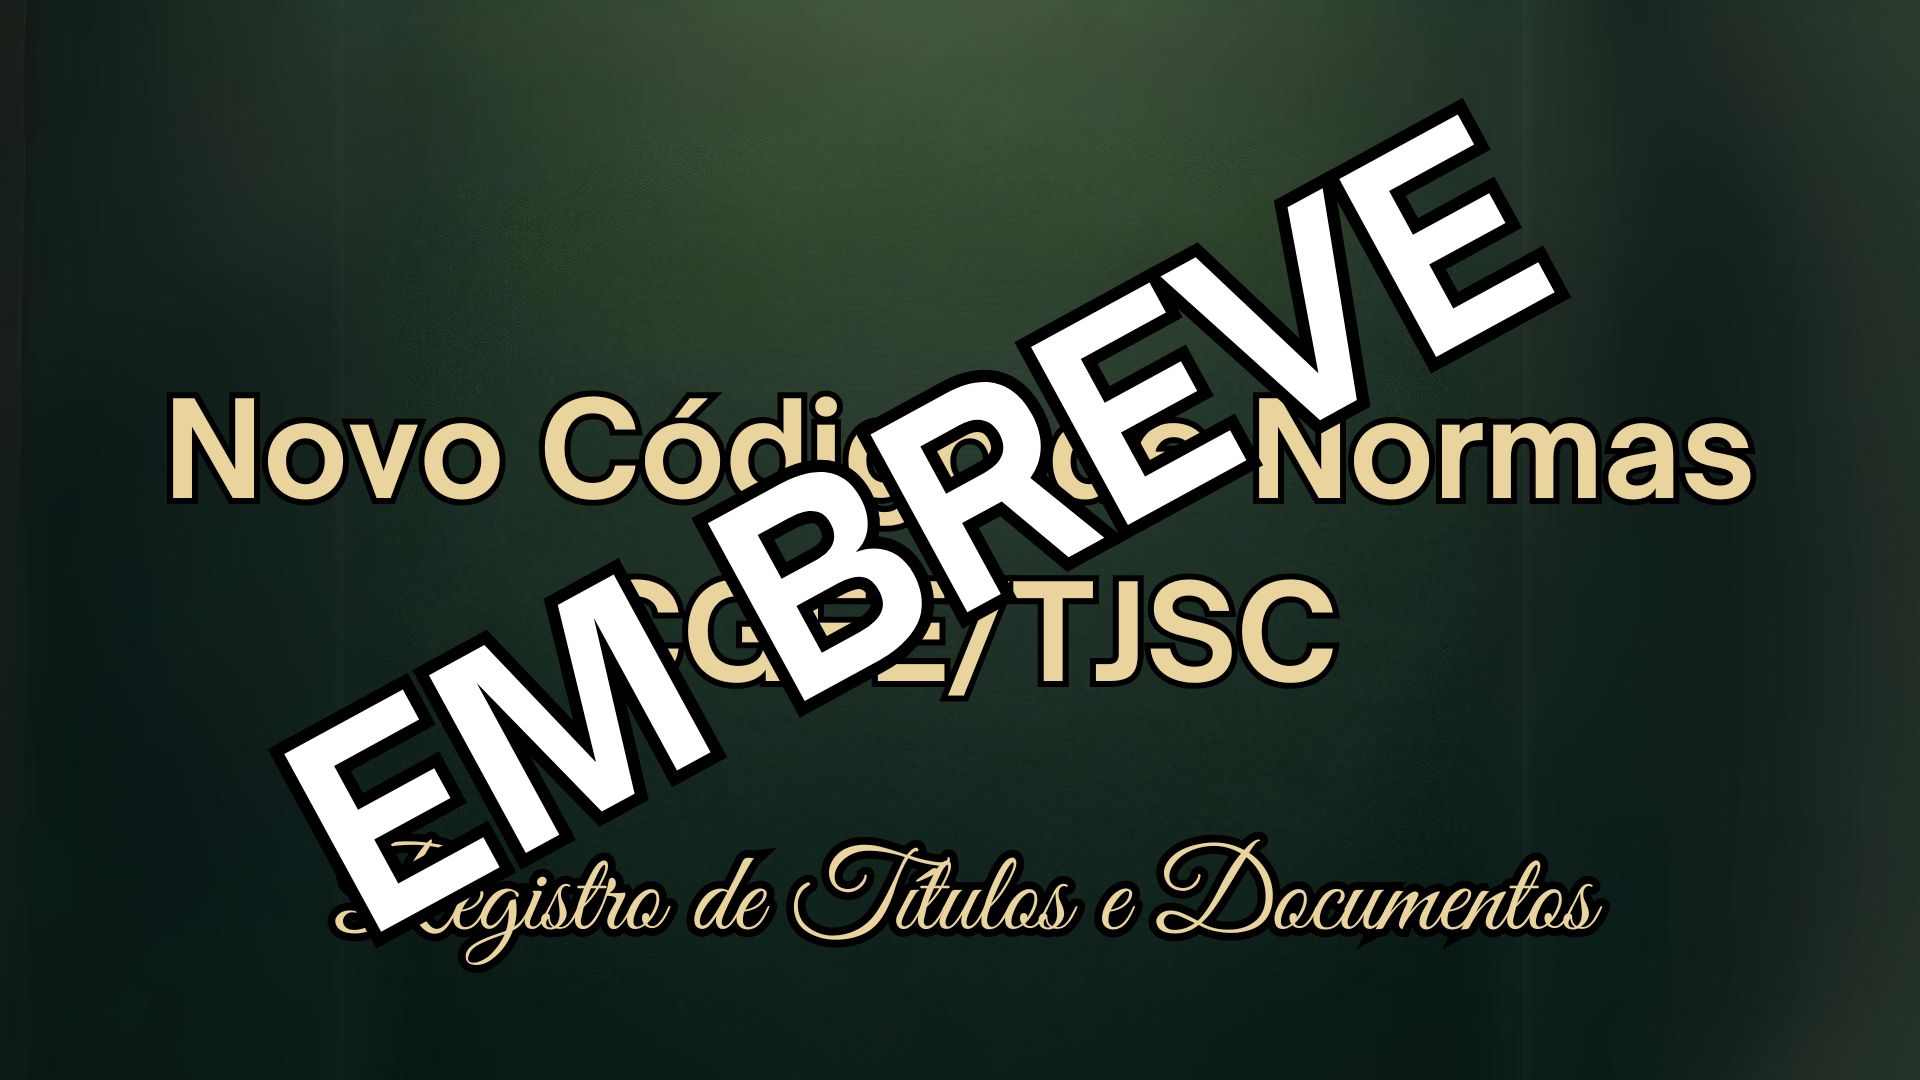 Novo Código de Normas CGFE/TJSC – Registro de Títulos e Documentos